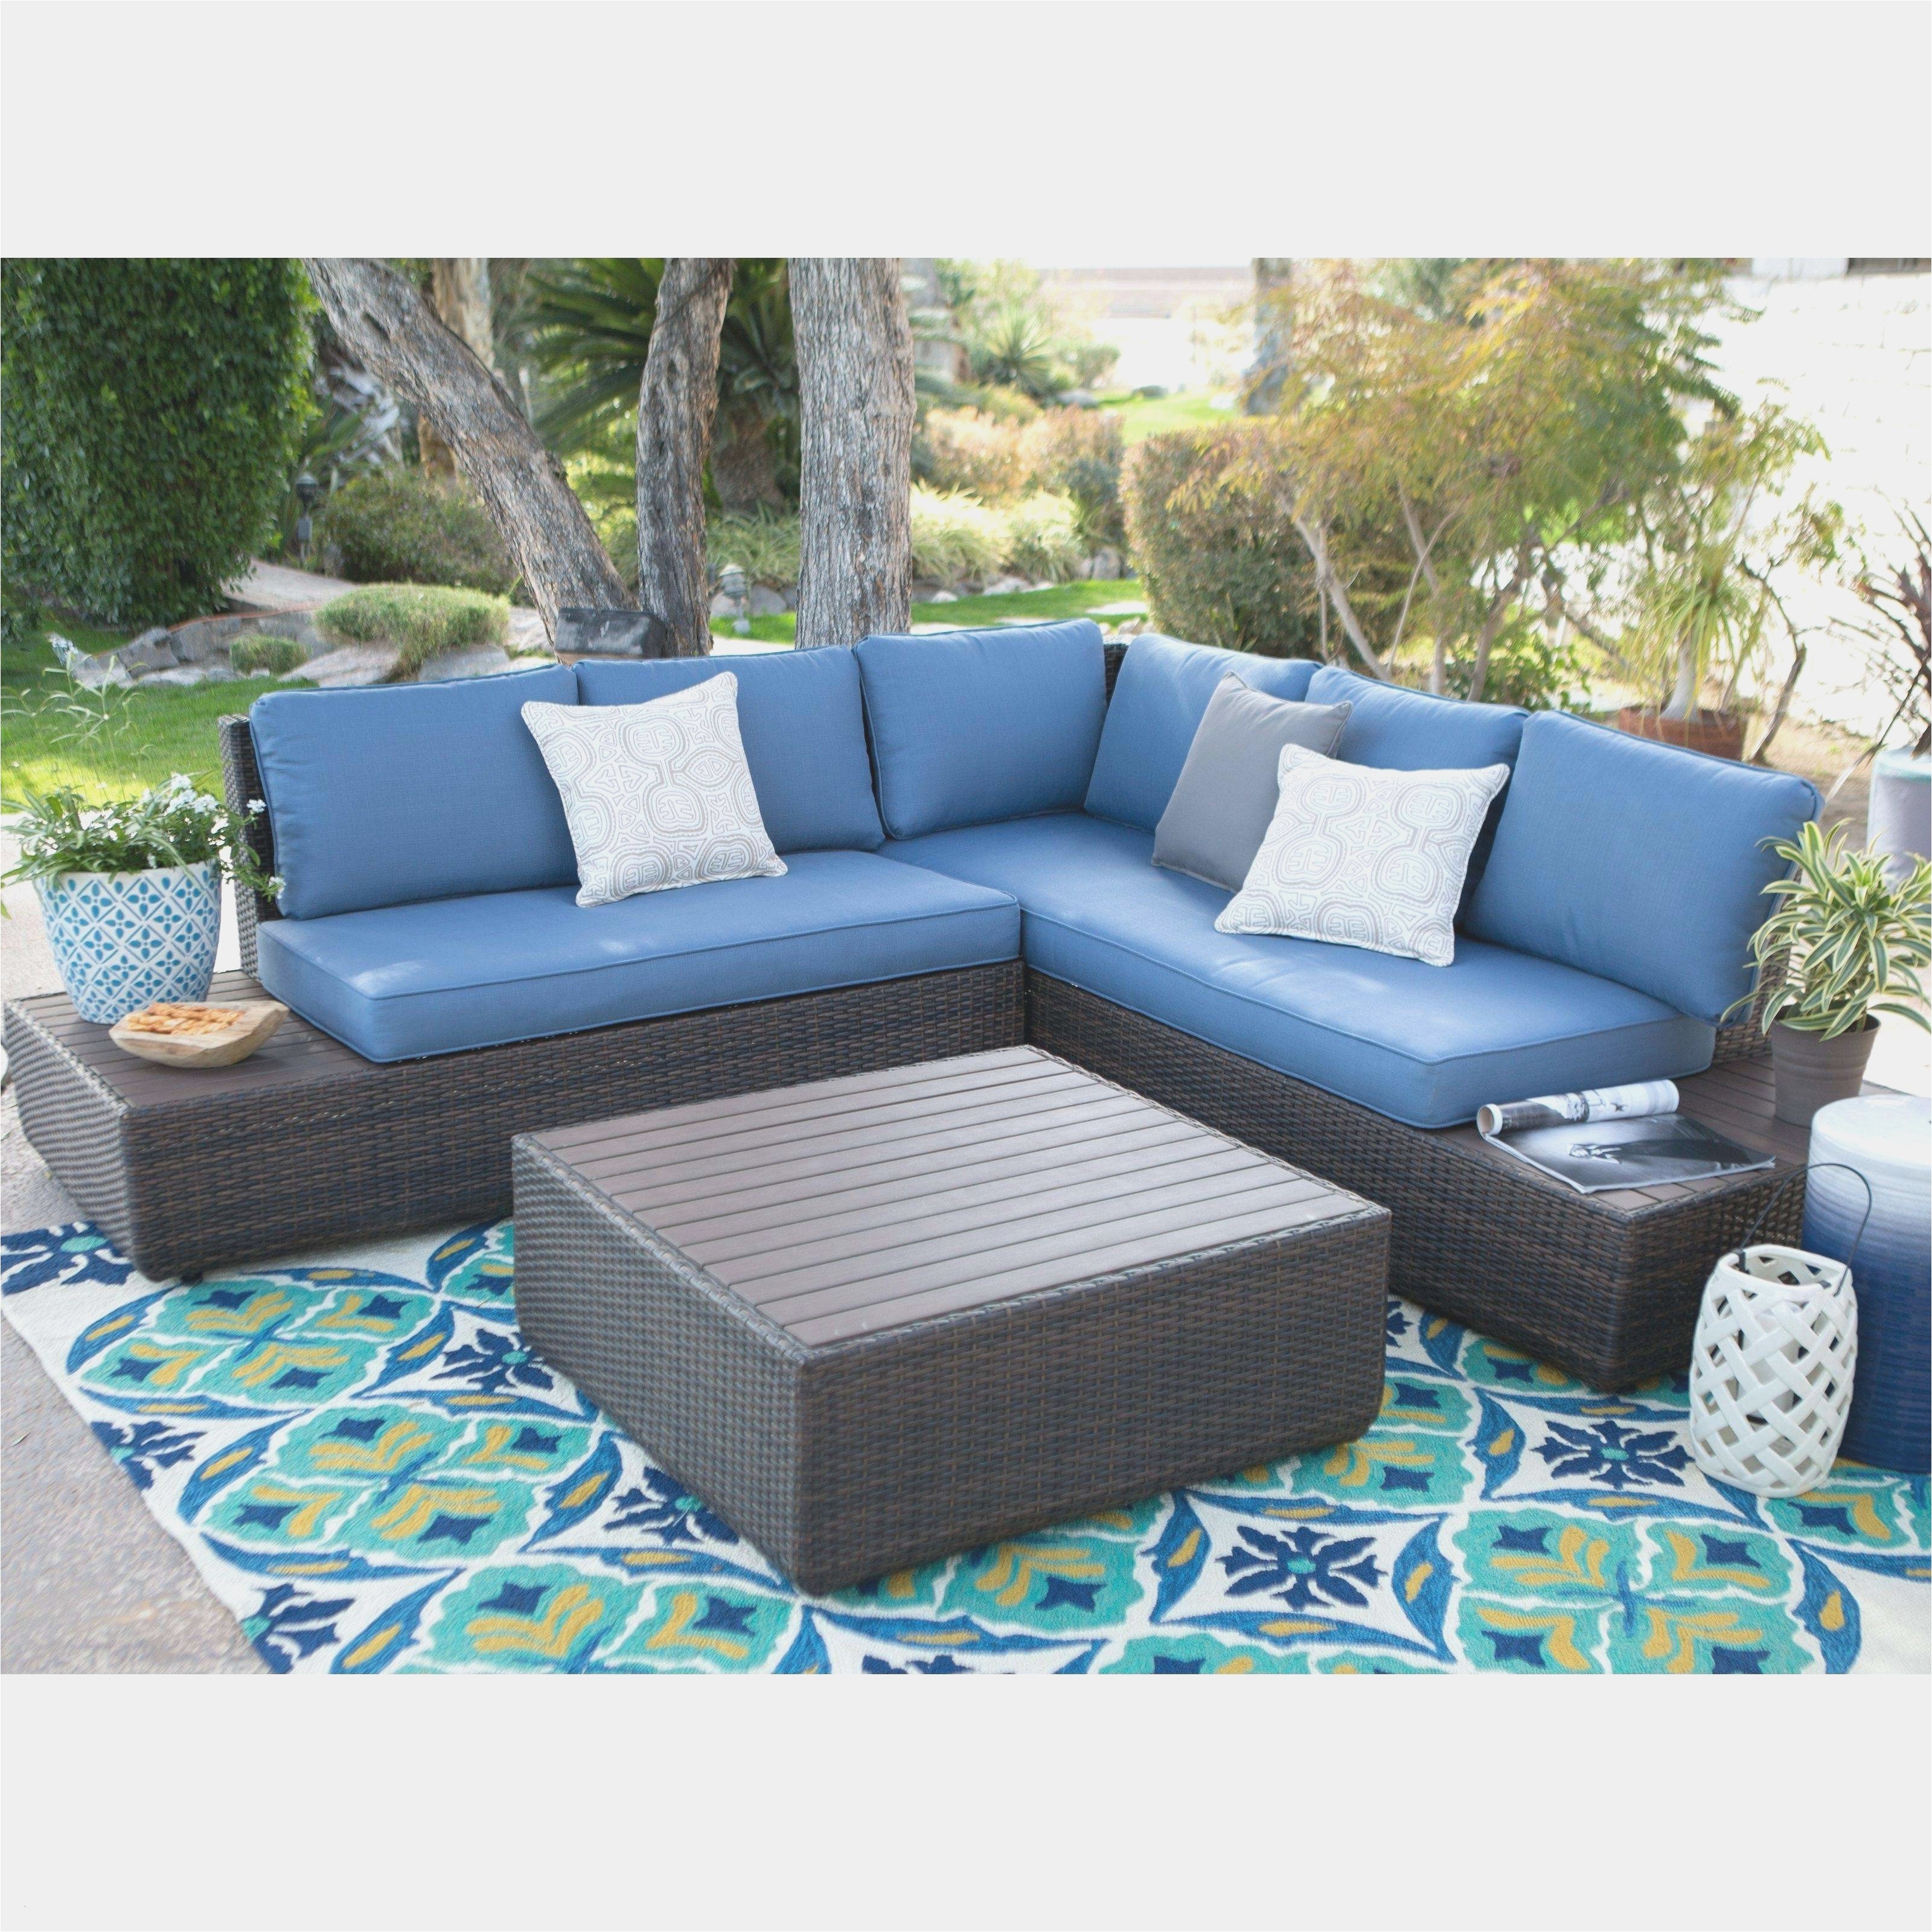 12×12 Outdoor Room Outdoor Patio Gazebo Elegant tommy Bahama Outdoor Furniture Luxury